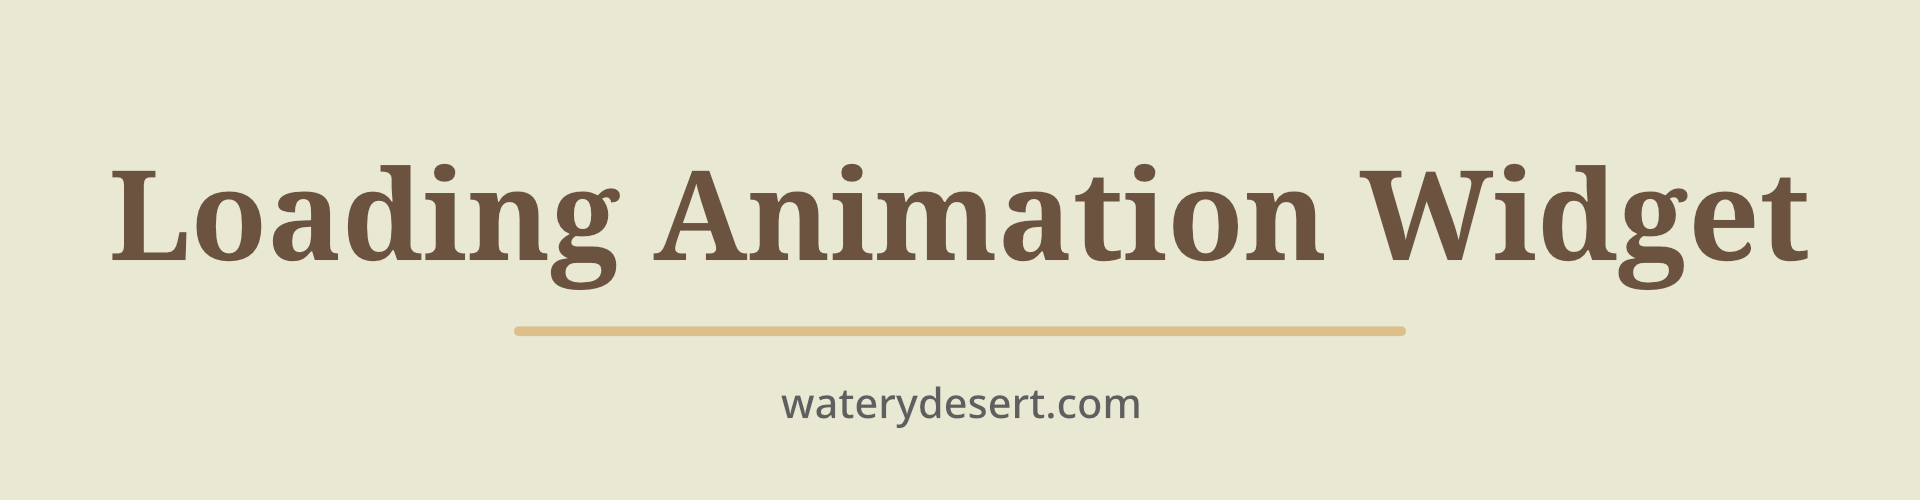 Loading Animation Widget